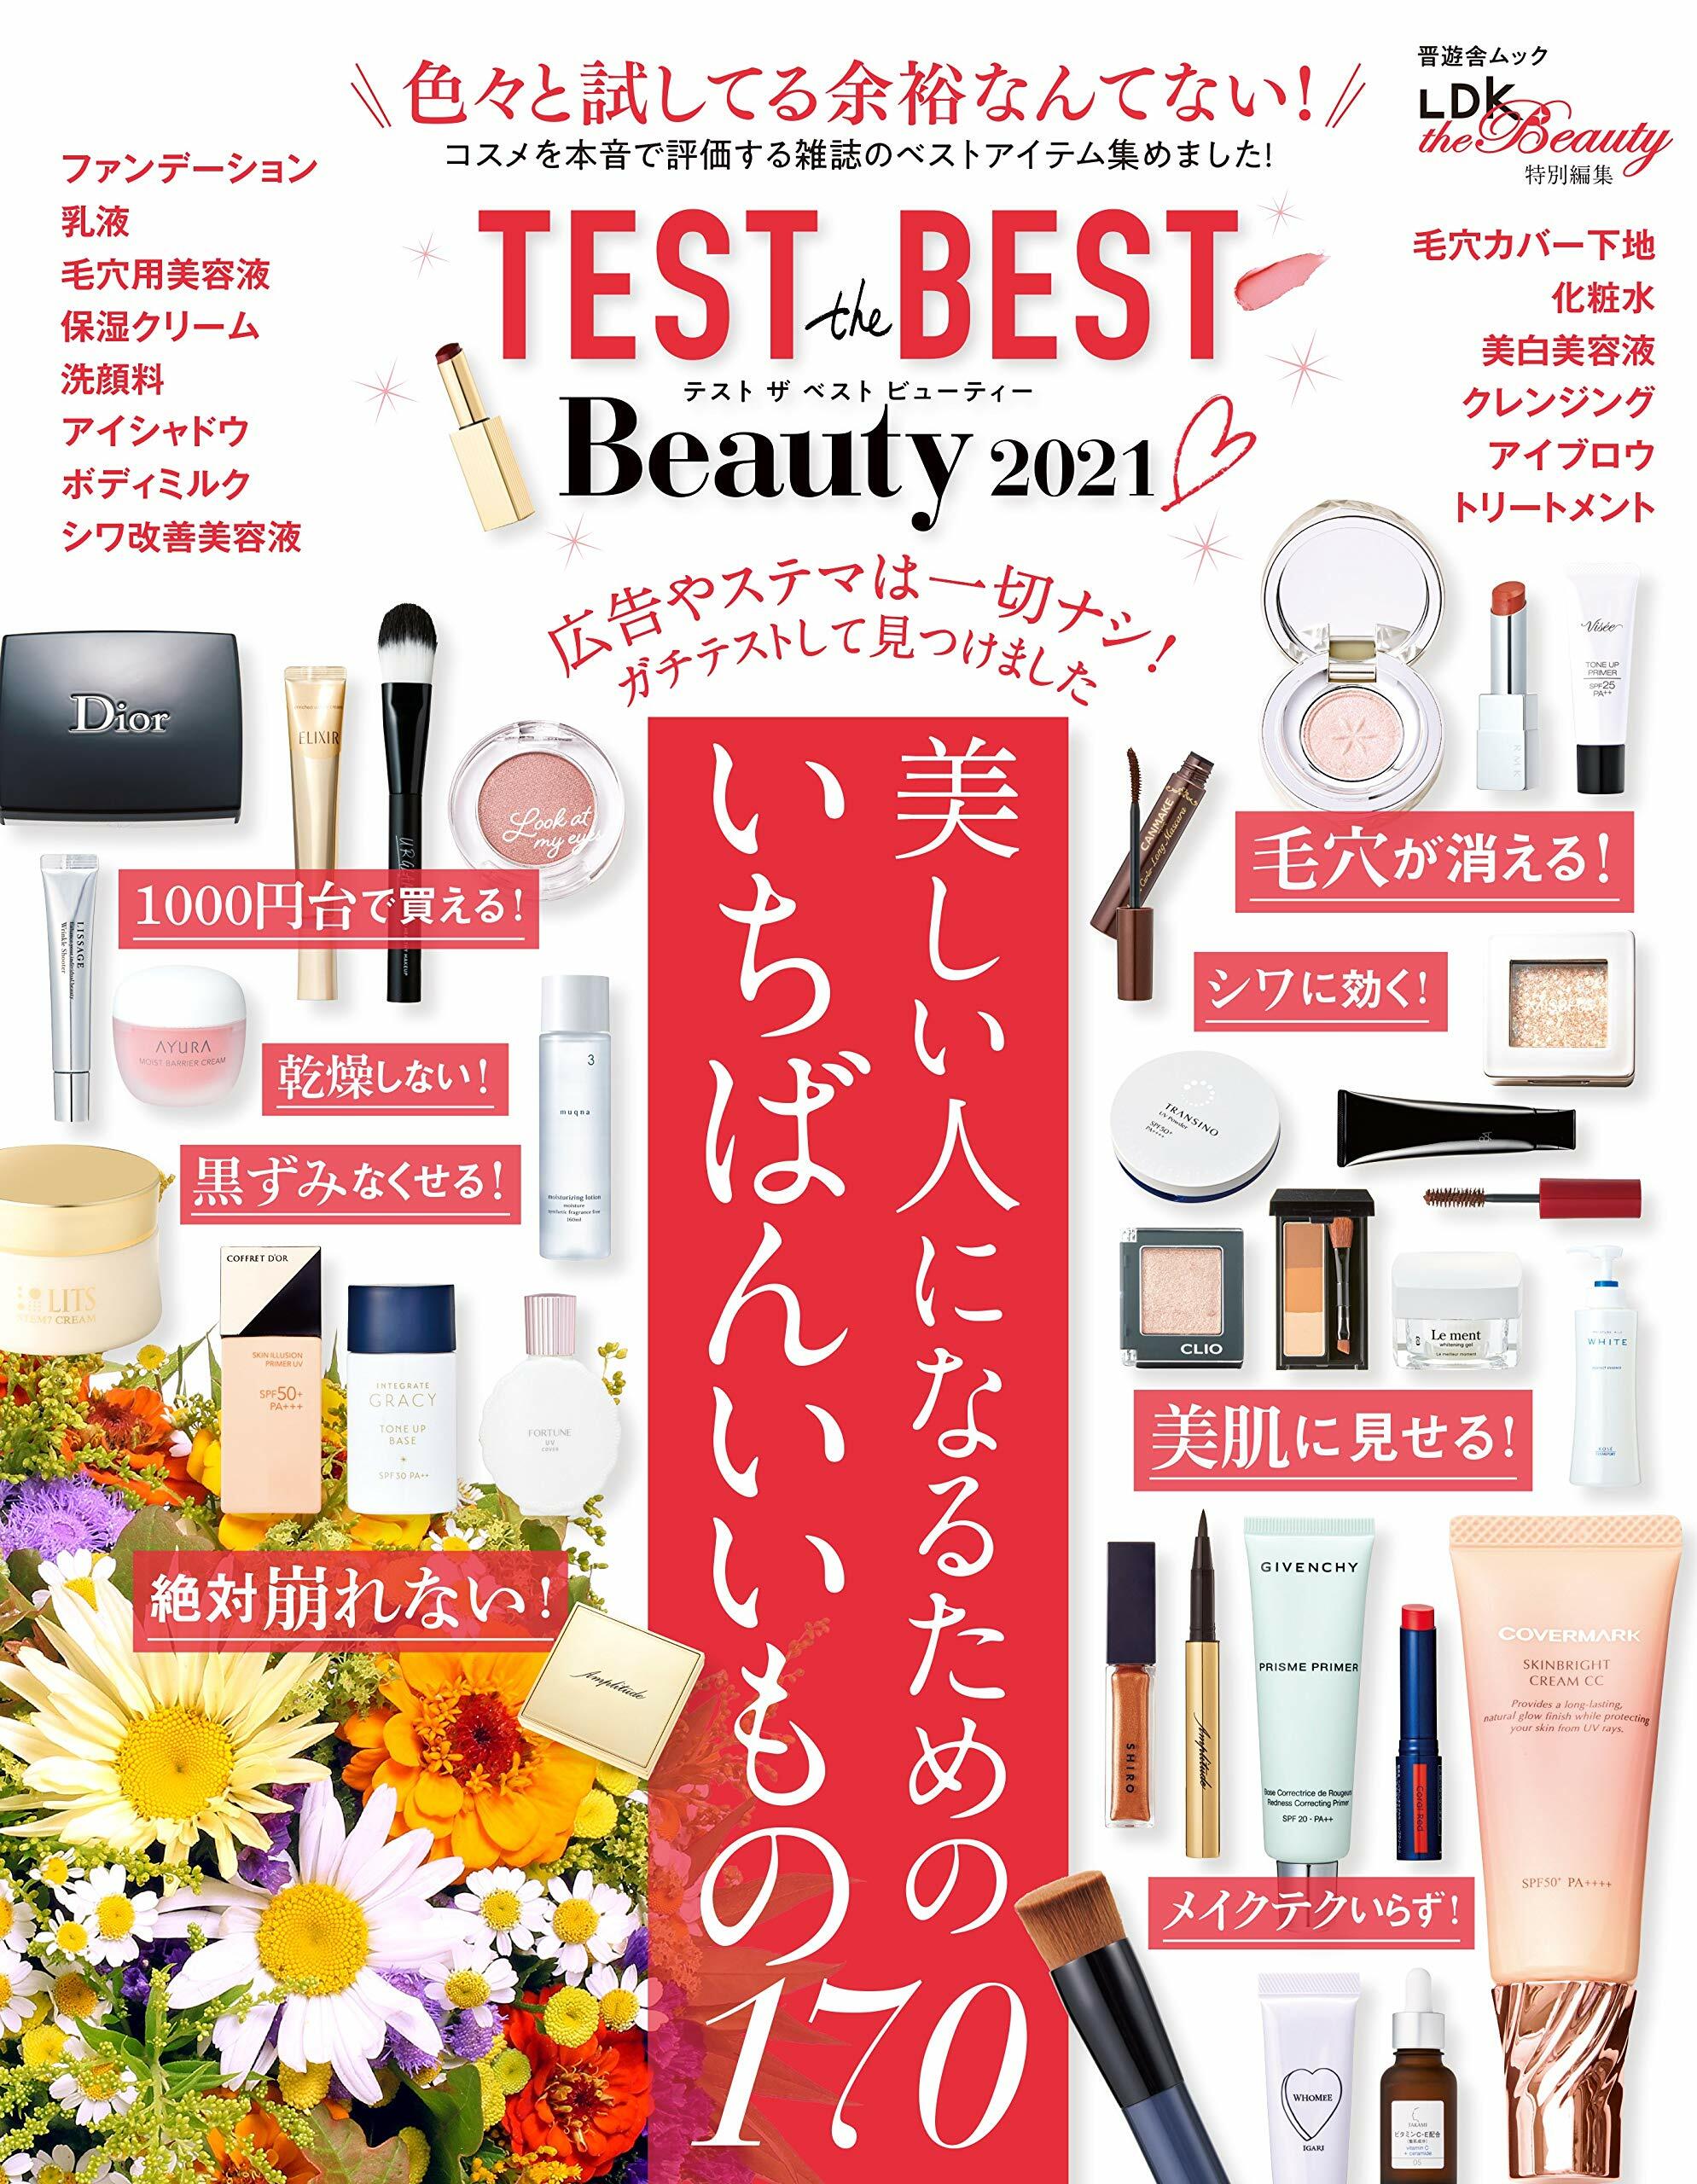 TEST the BEST Beauty 2021 (晋遊舍ムック)